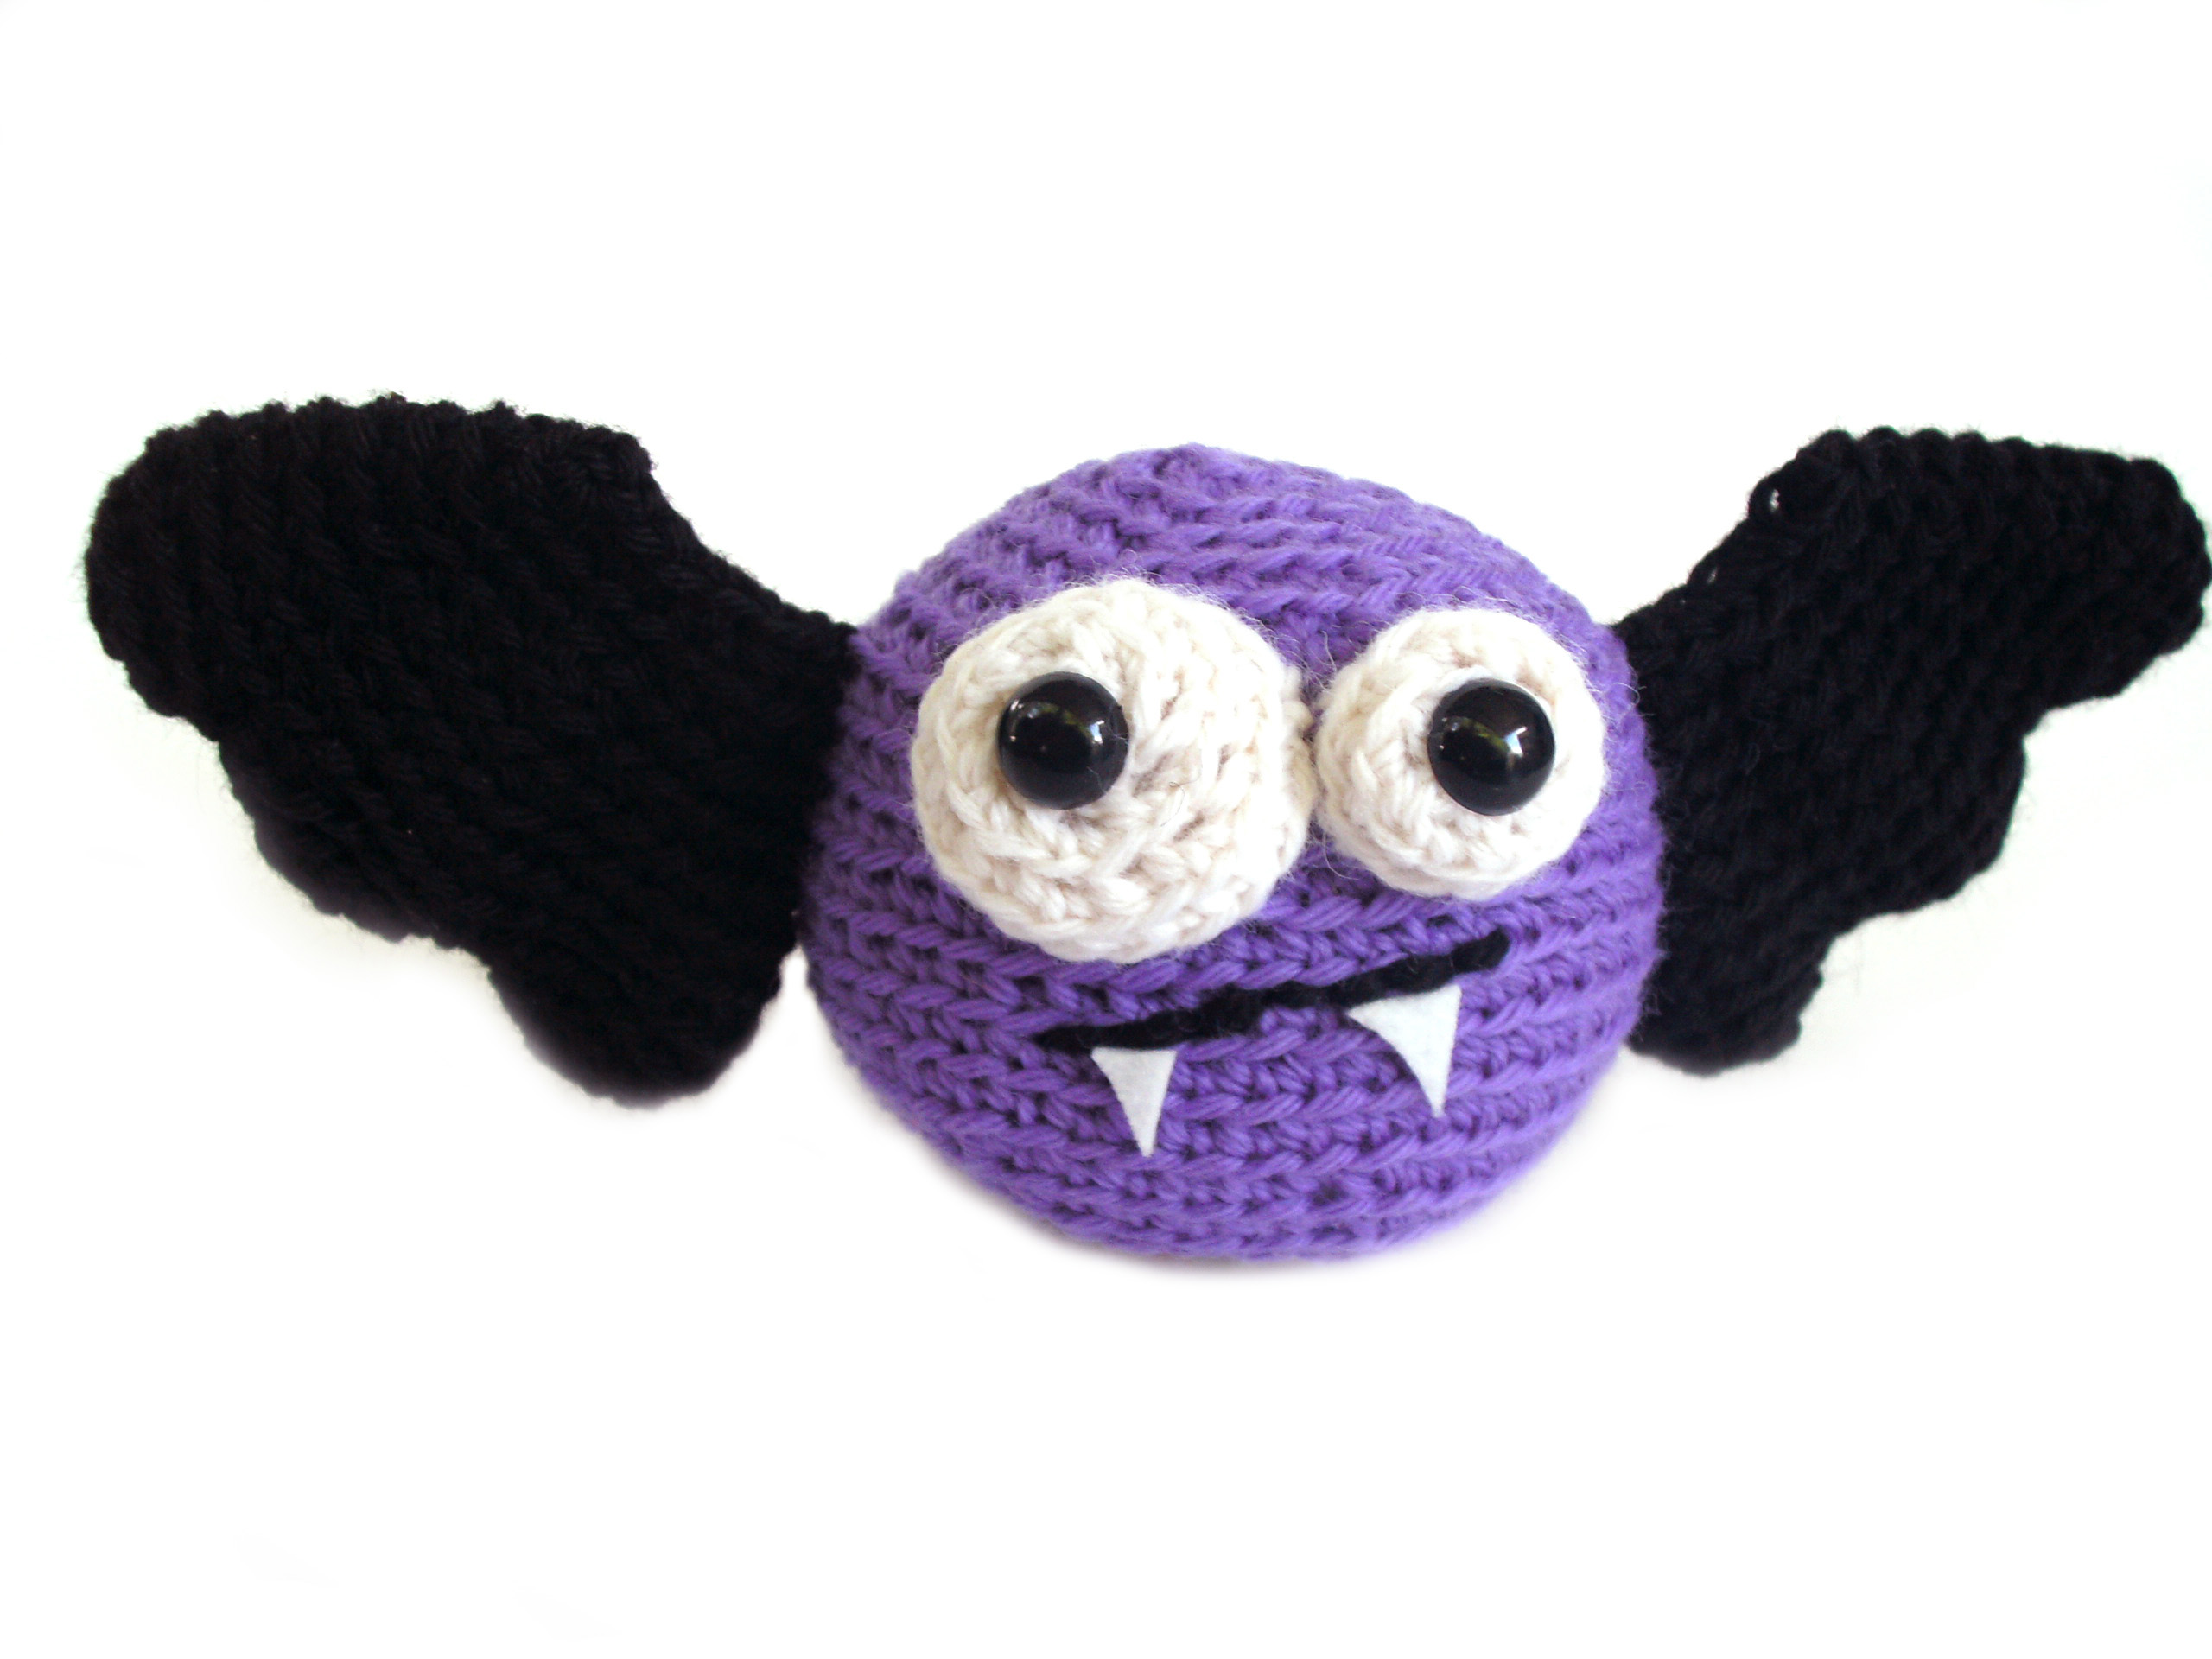 Crochet an adorable Tiny Bat for Halloween | FreshStitches